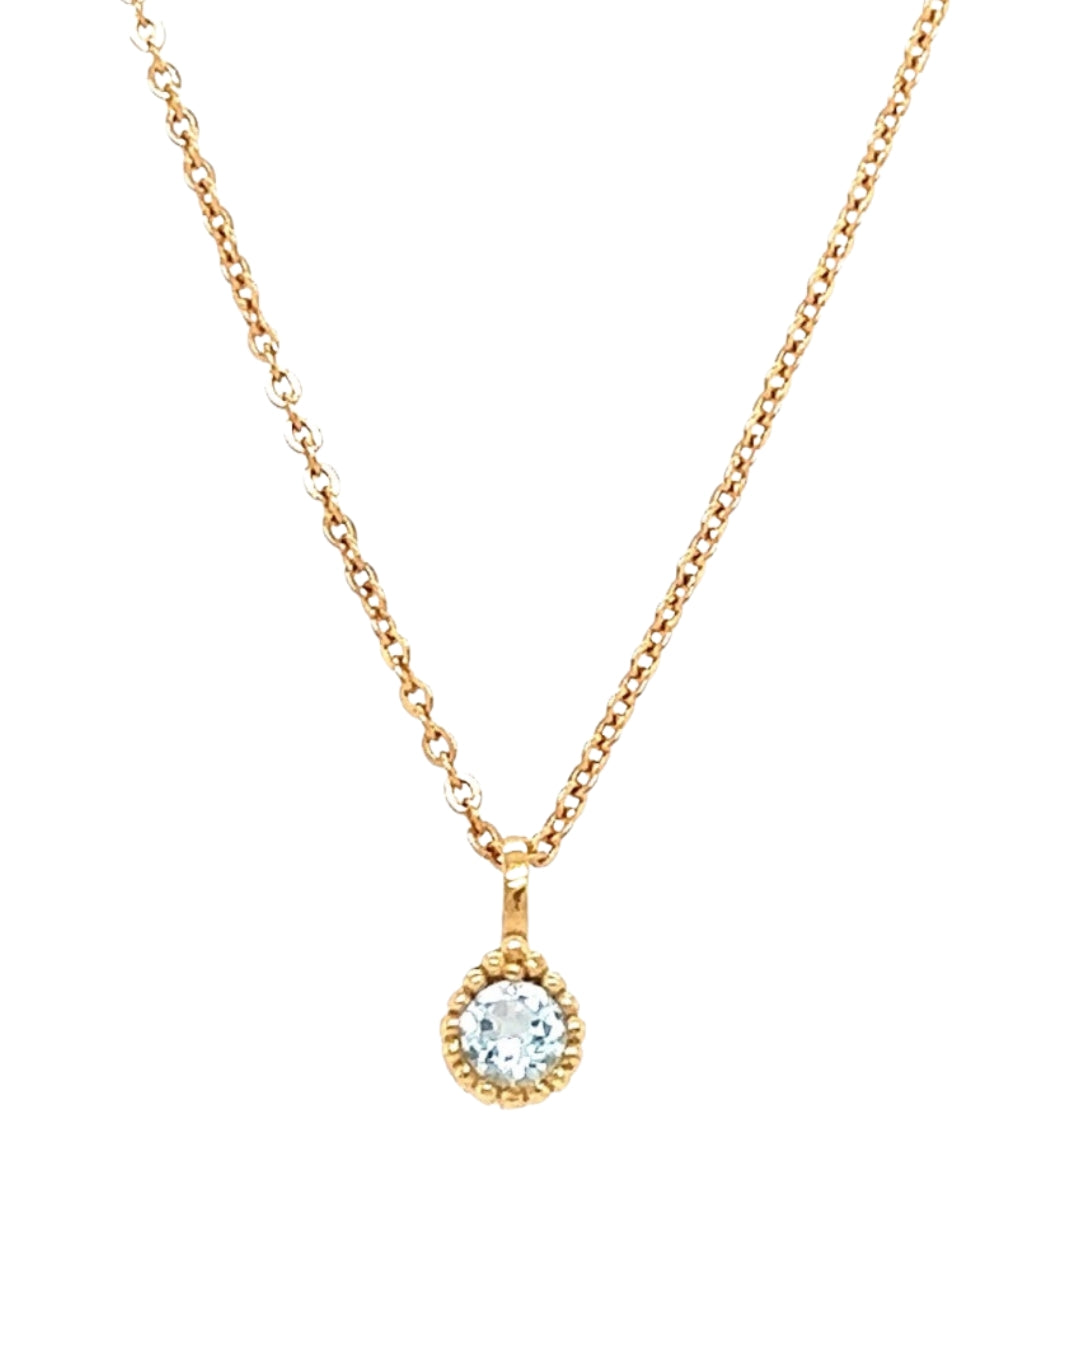 Gold March Aquamarine Birthstone Necklace Chain.